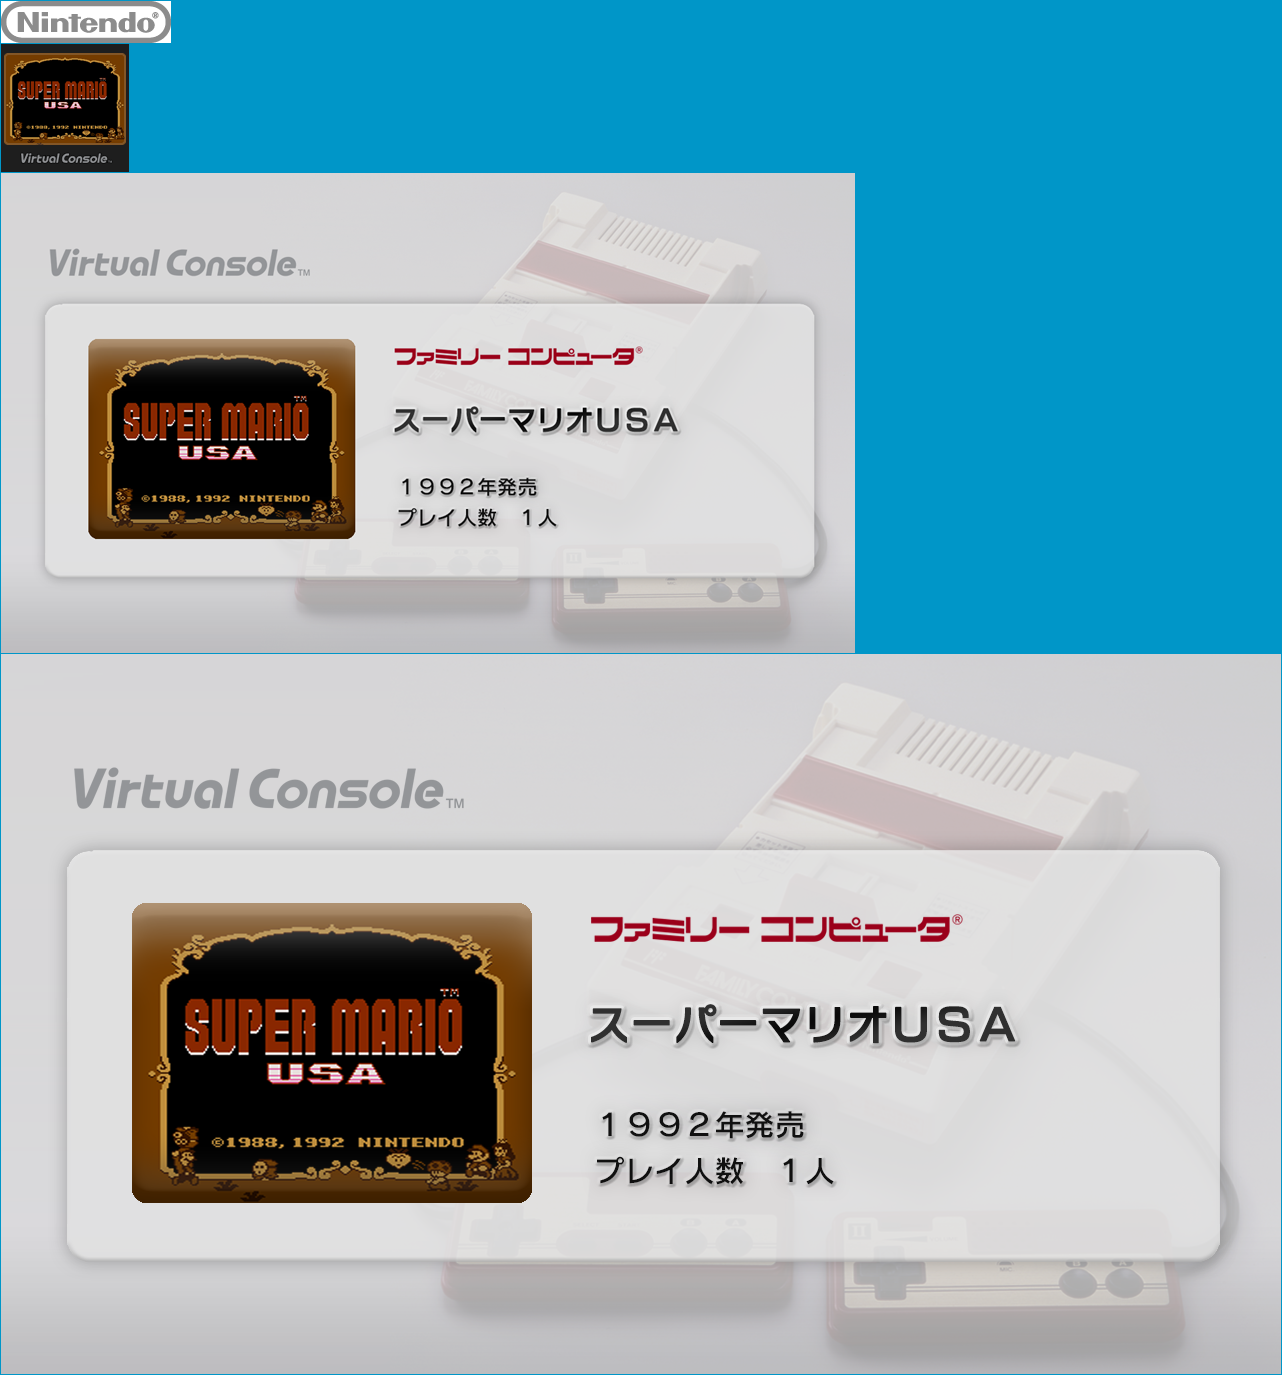 Virtual Console - Super Mario USA